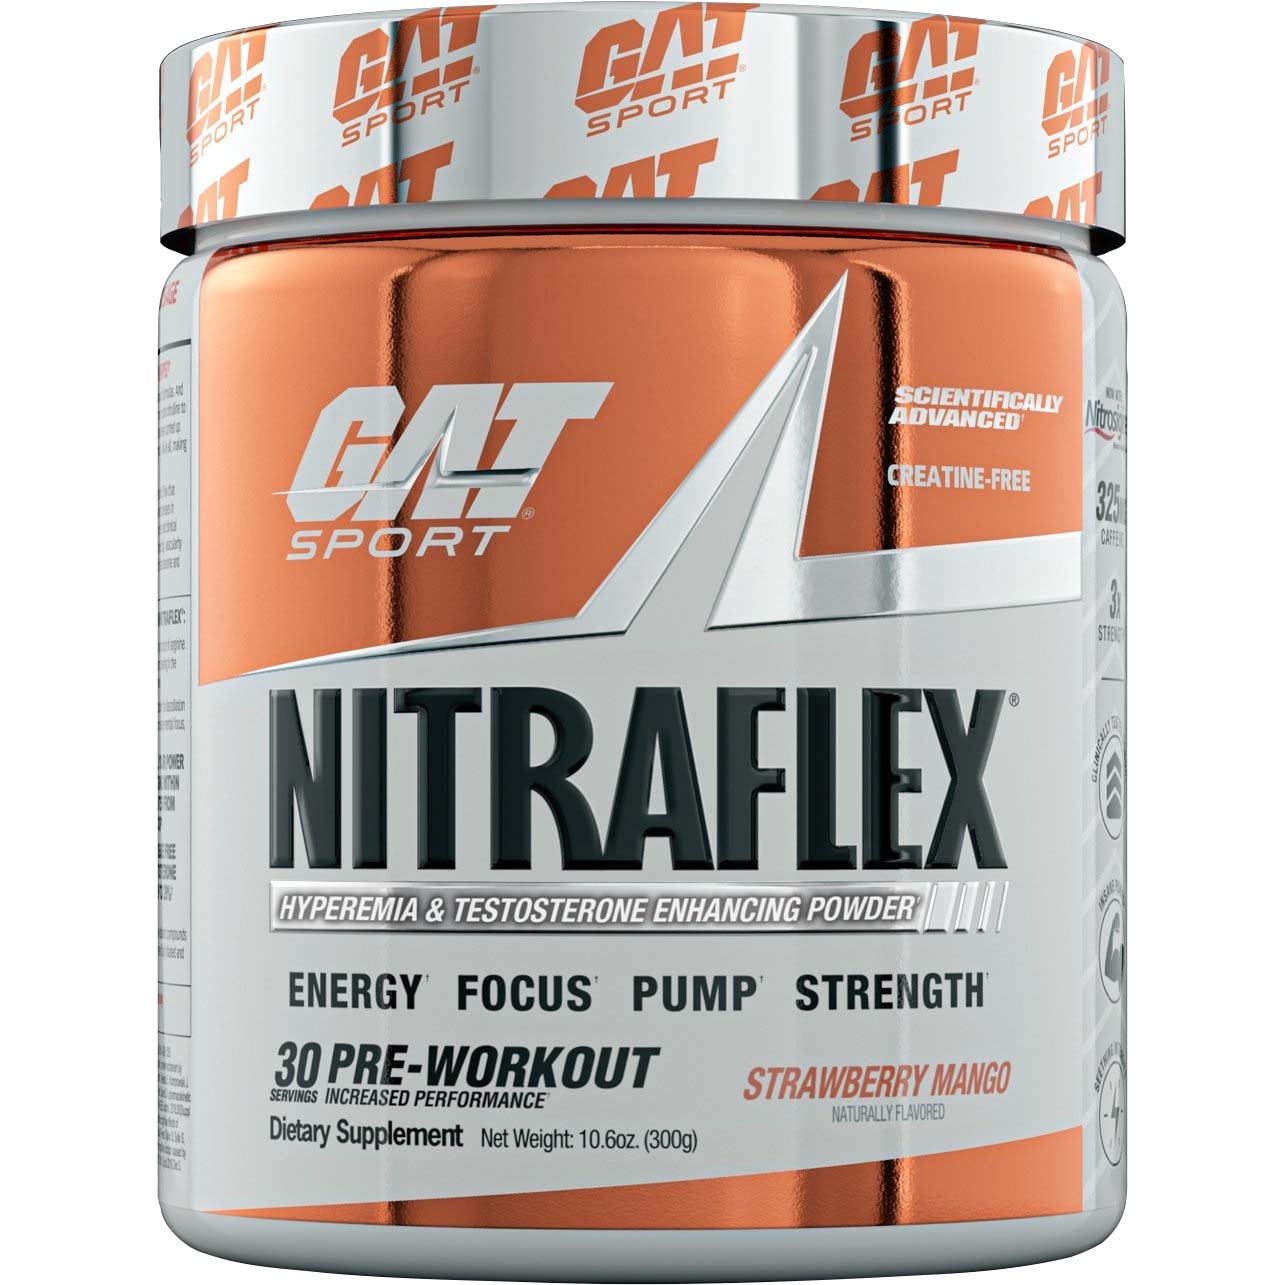 Gat Sport Nitraflex Testosterone Boosting Powder, Strawberry Mango, 30